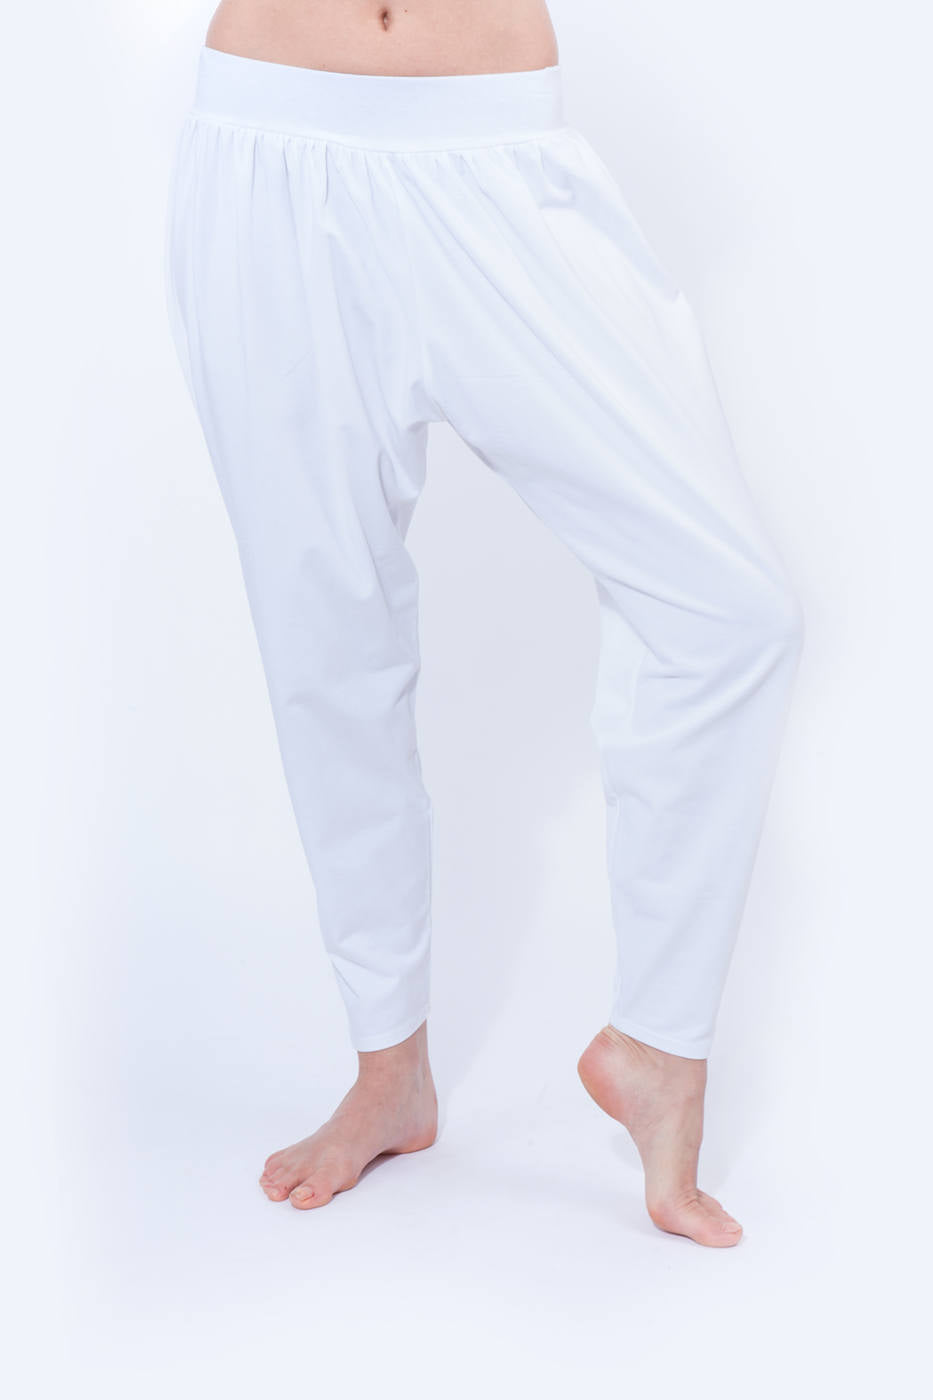 Women's Loungewear Bottoms, White Cotton Kundalini Yoga Pant